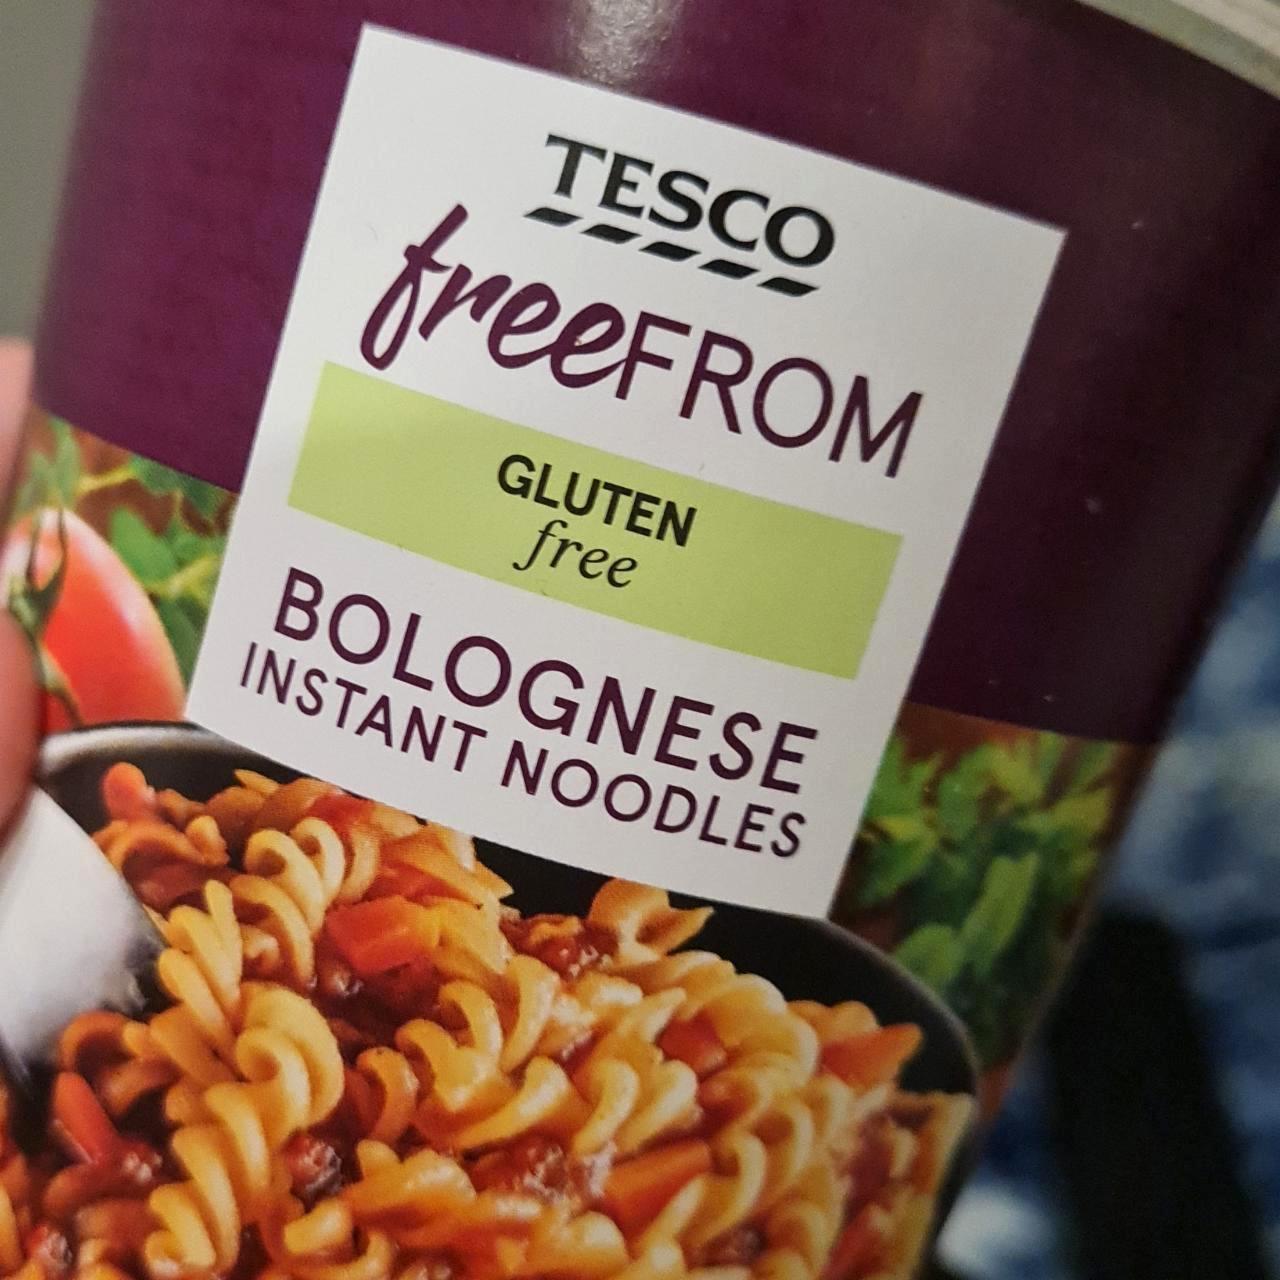 Képek - Bolognese instant noodles gluten free Tesco FreeFrom